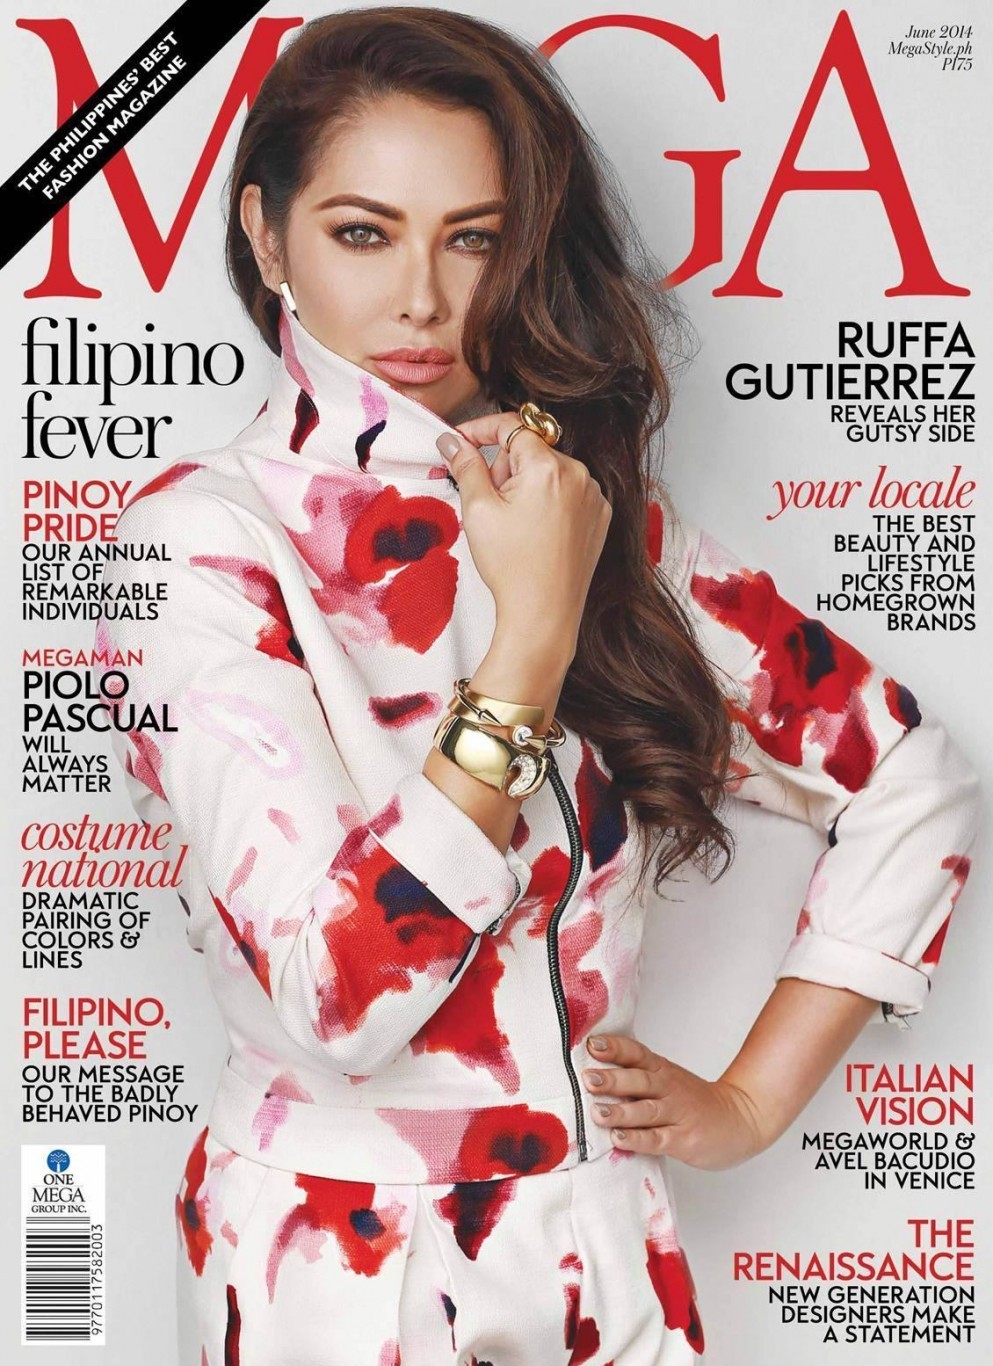 MEGA June Cover Issue Featuring Ruffa Gutierrez